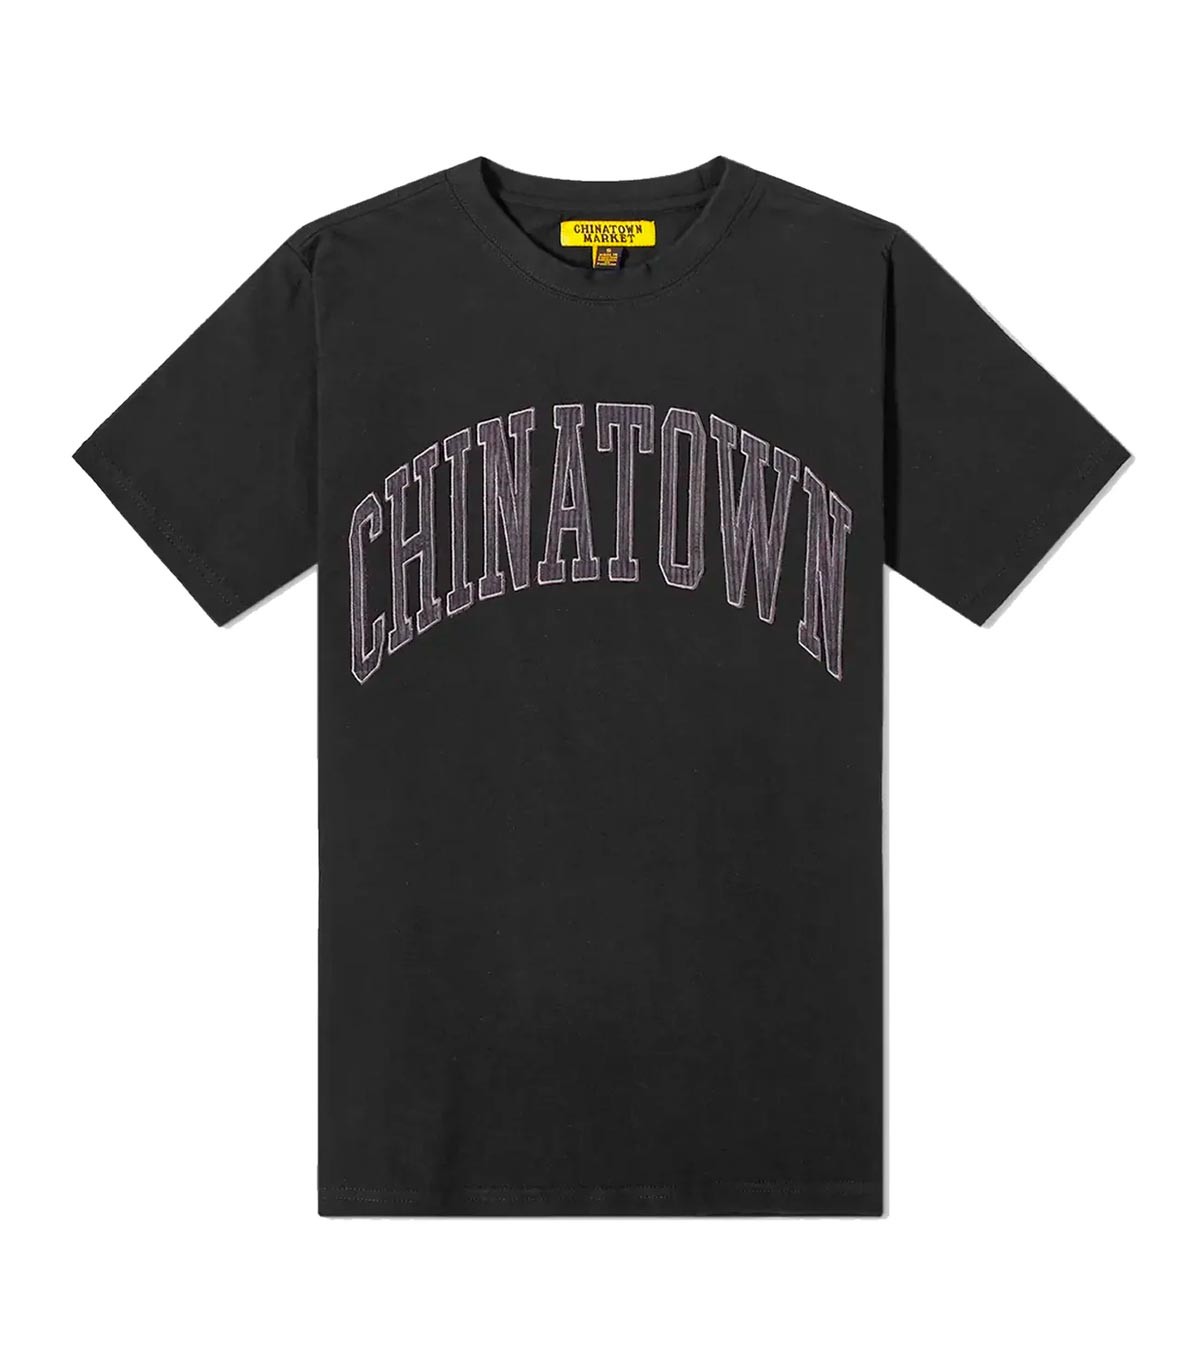 Market - Camiseta Chinatown